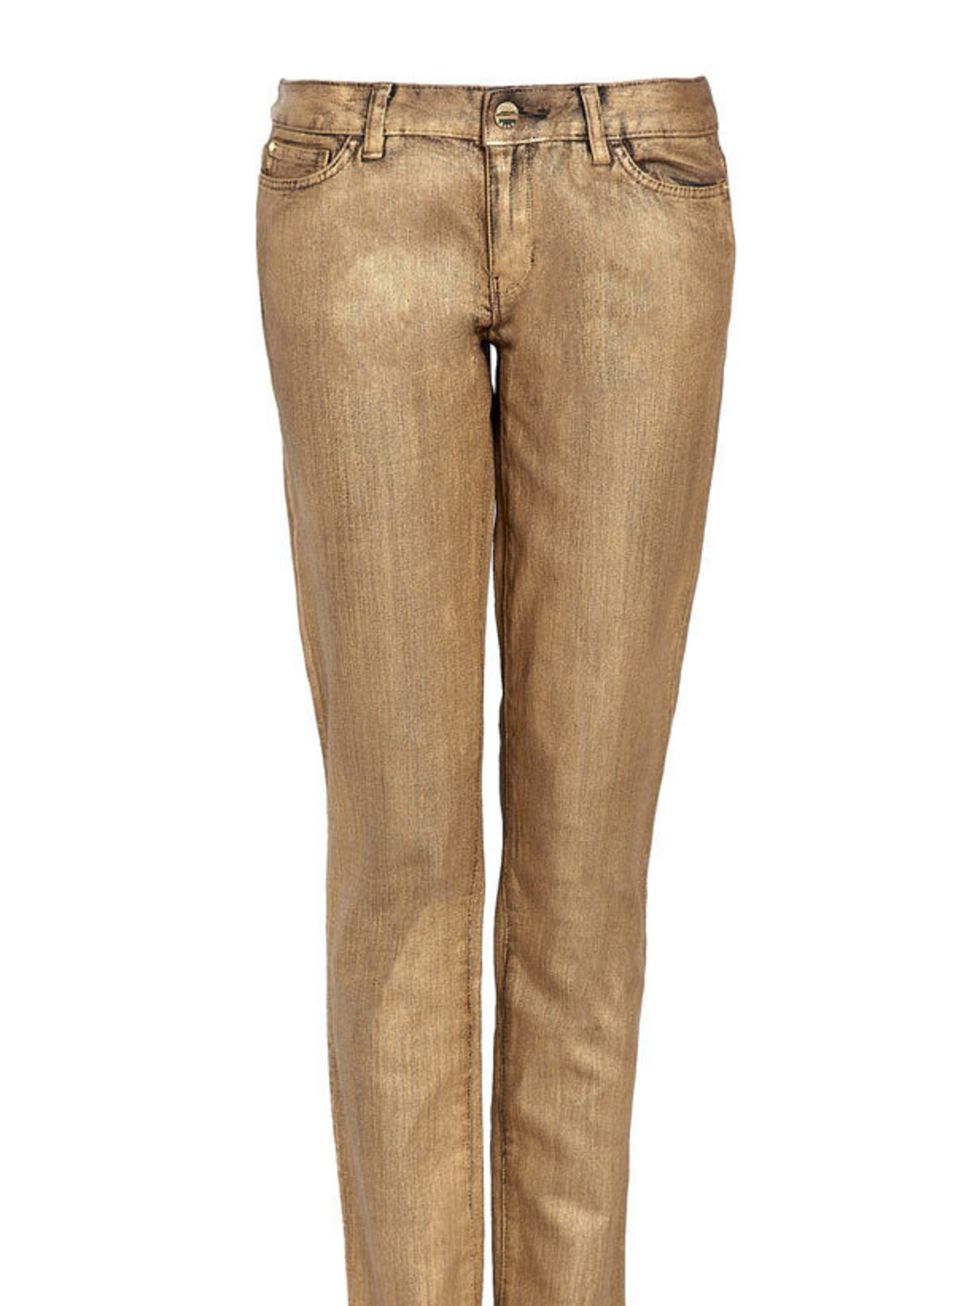 <p>Michael Michael Kors metallic jeans, £150, at <a href="http://www.my-wardrobe.com/michael-michael-kors/metallic-gold-skinny-denim-jean-829087">my-wardrobe.com</a></p>